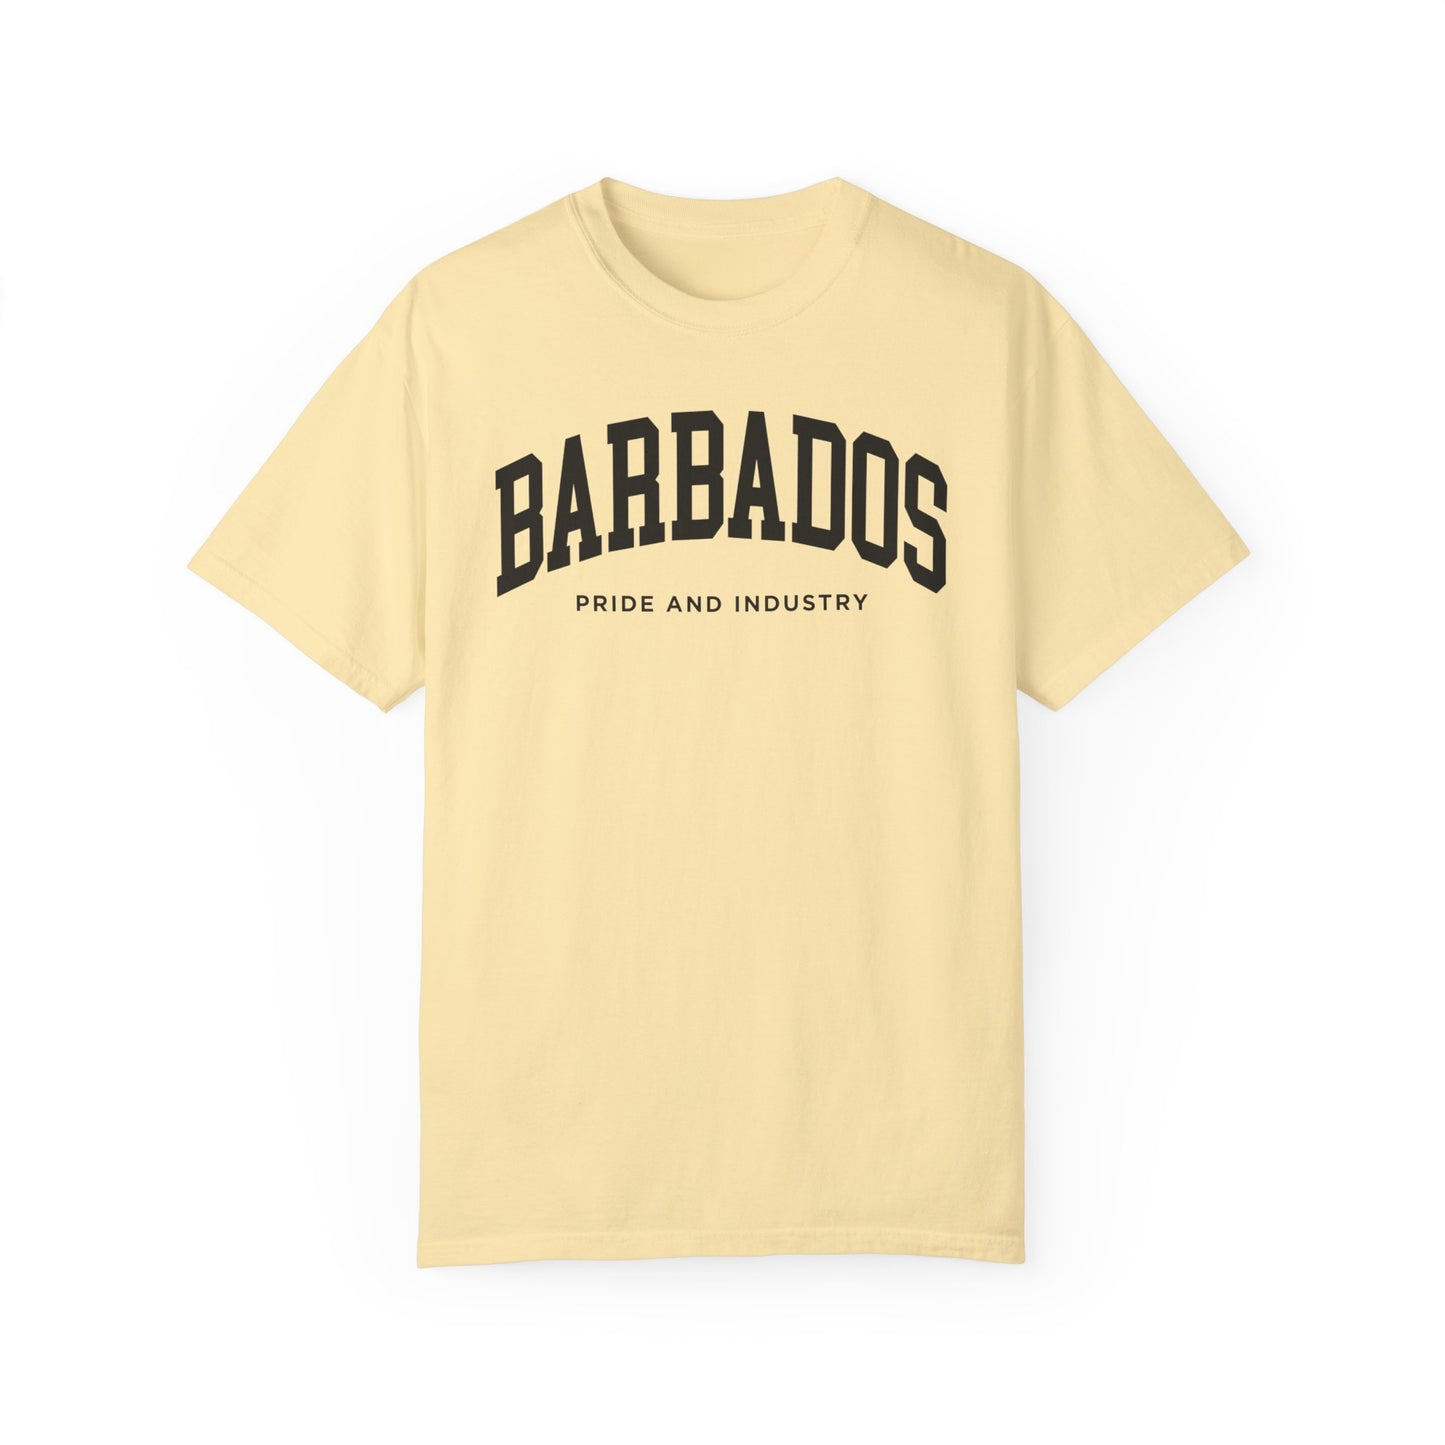 Barbados Comfort Colors® Tee